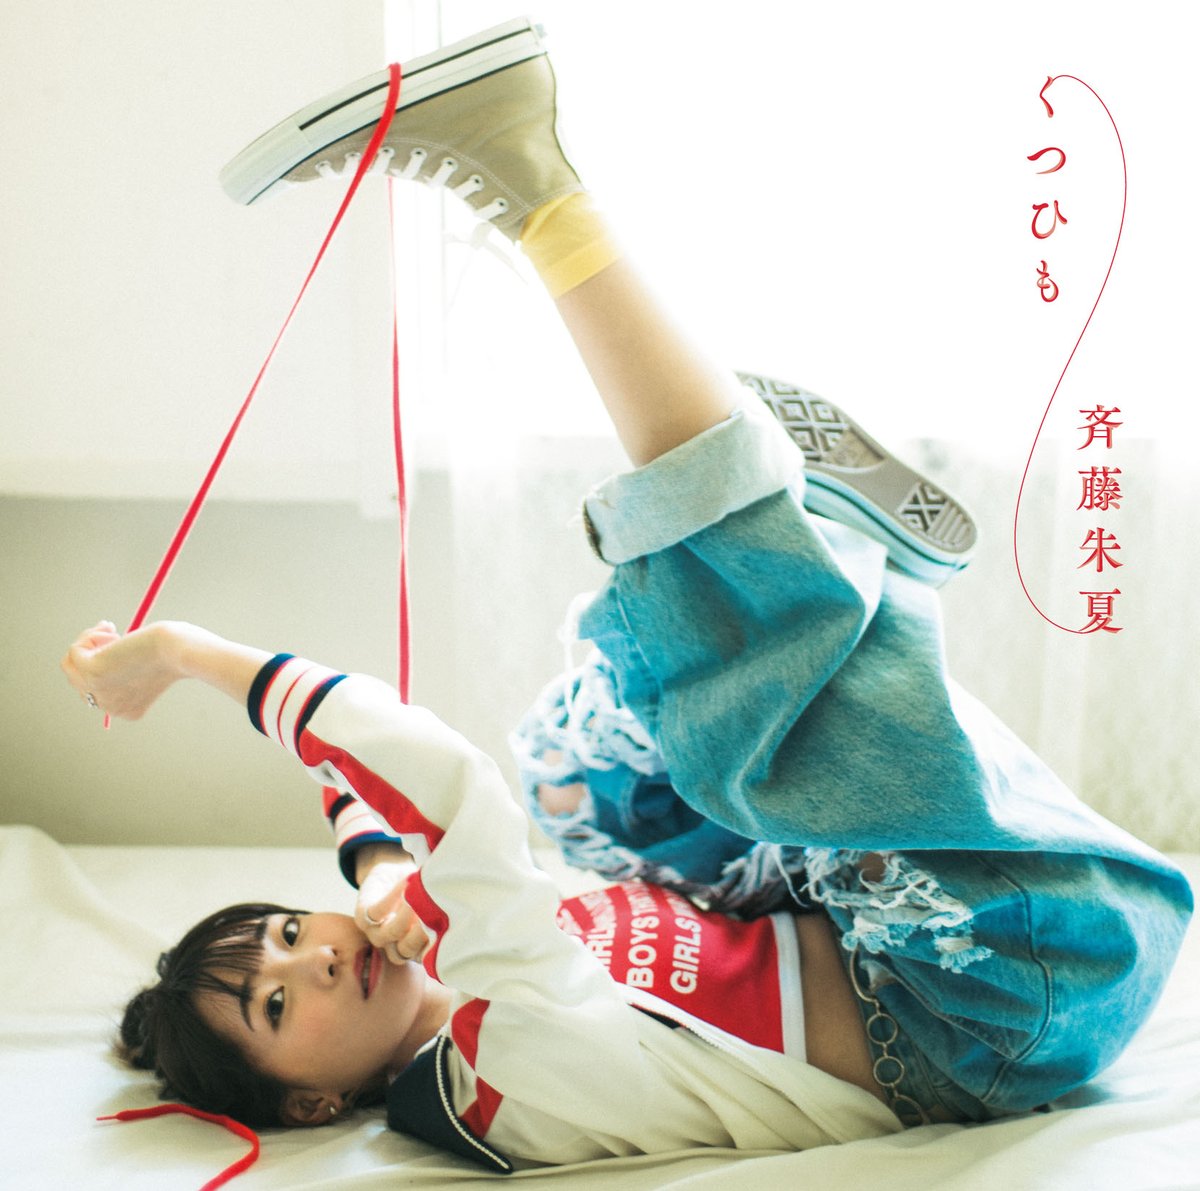 Cover for『Shuka Saito - Kutsuhimo』from the release『Kutsuhimo』